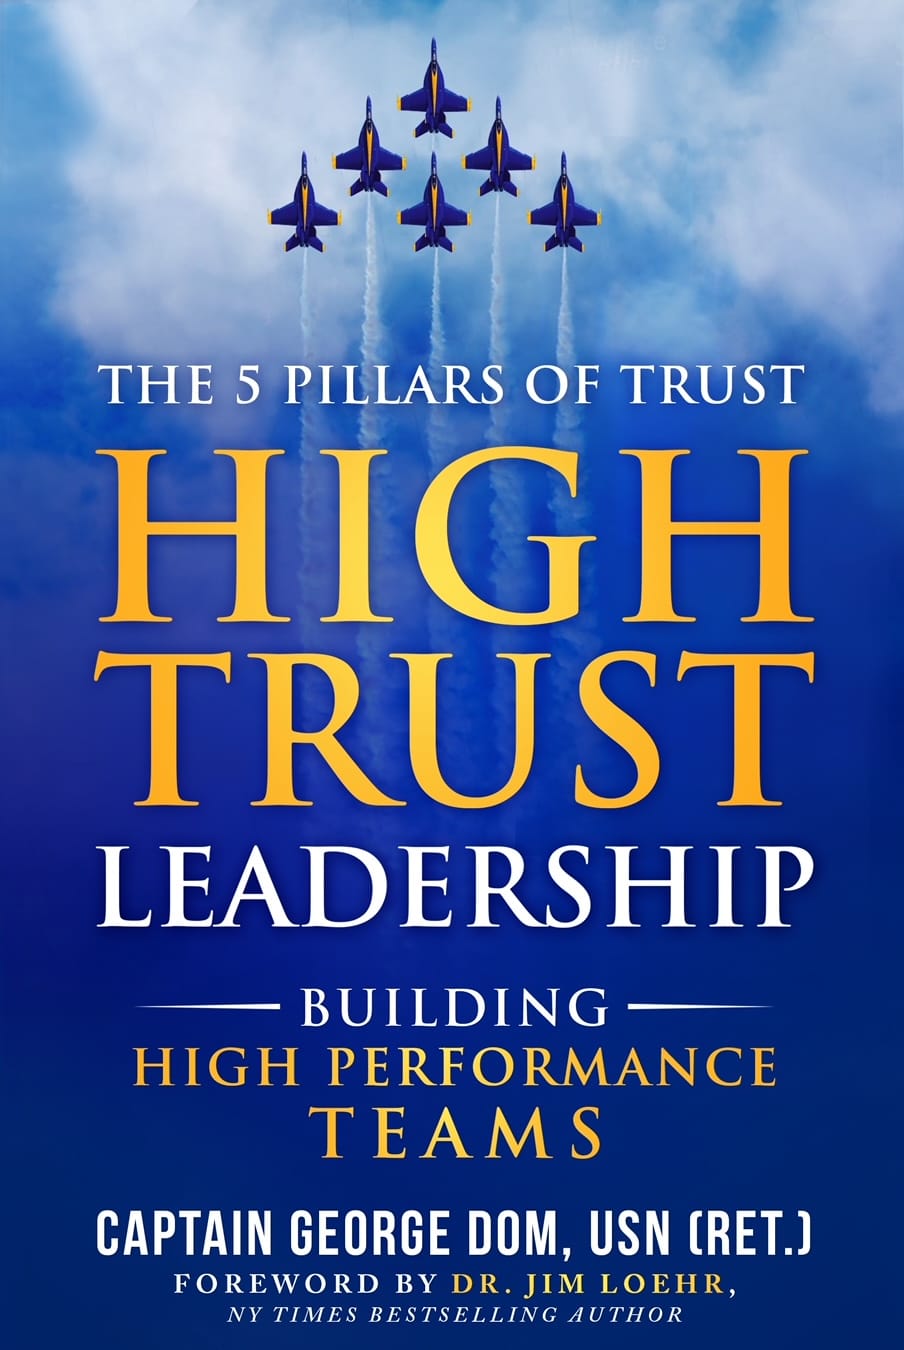 The Book: High Trust Leadership: The 5 Pillars of Trust (Building High Performance Teams)